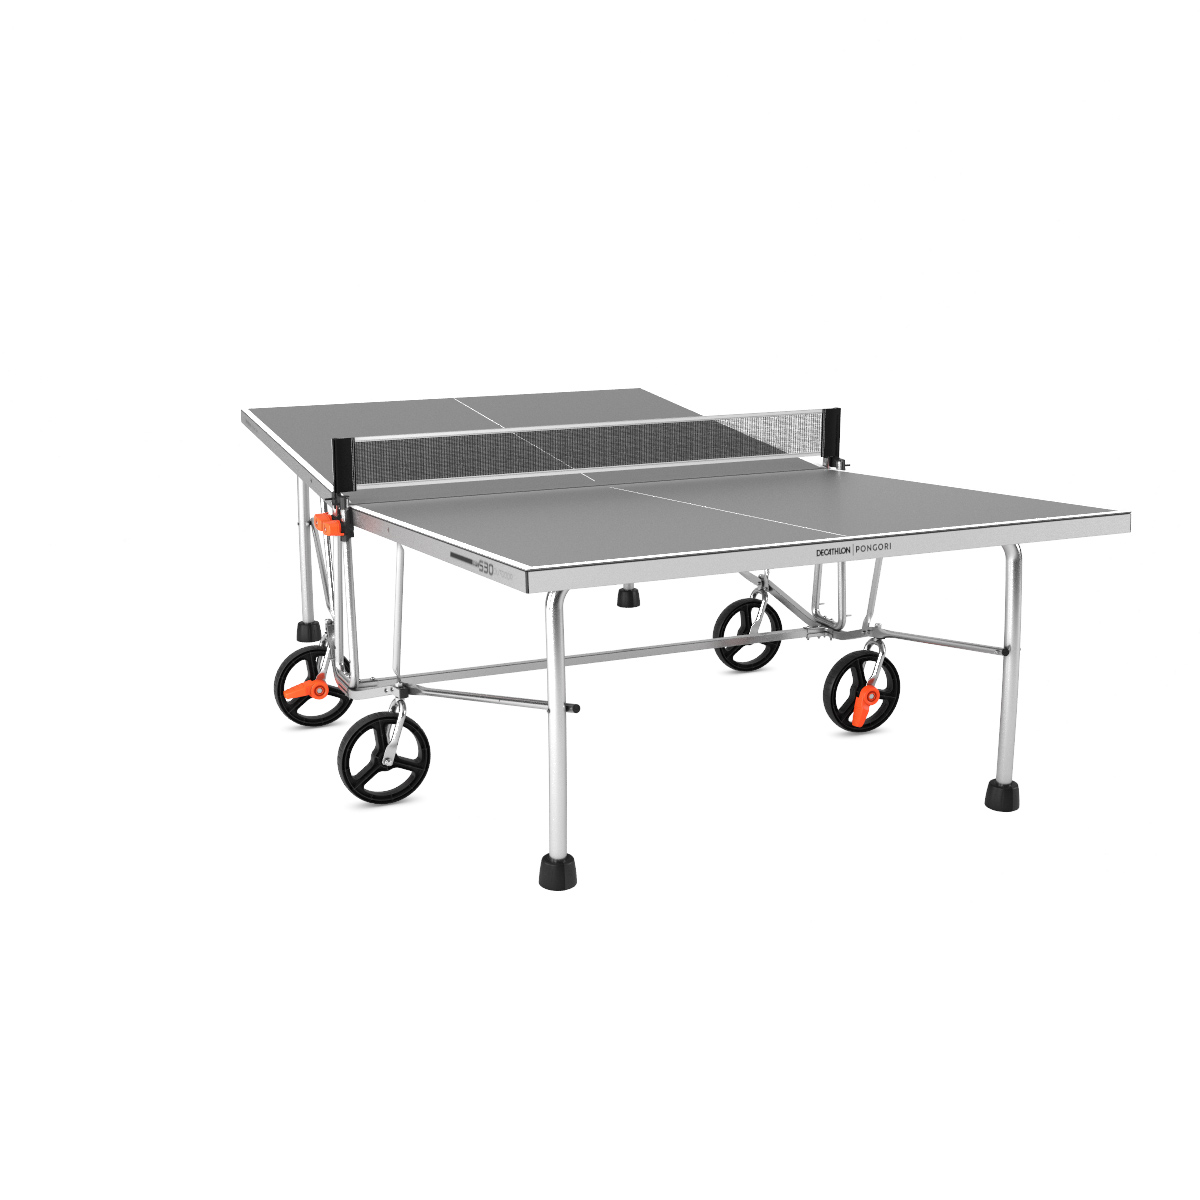 decathlon table tennis outdoor